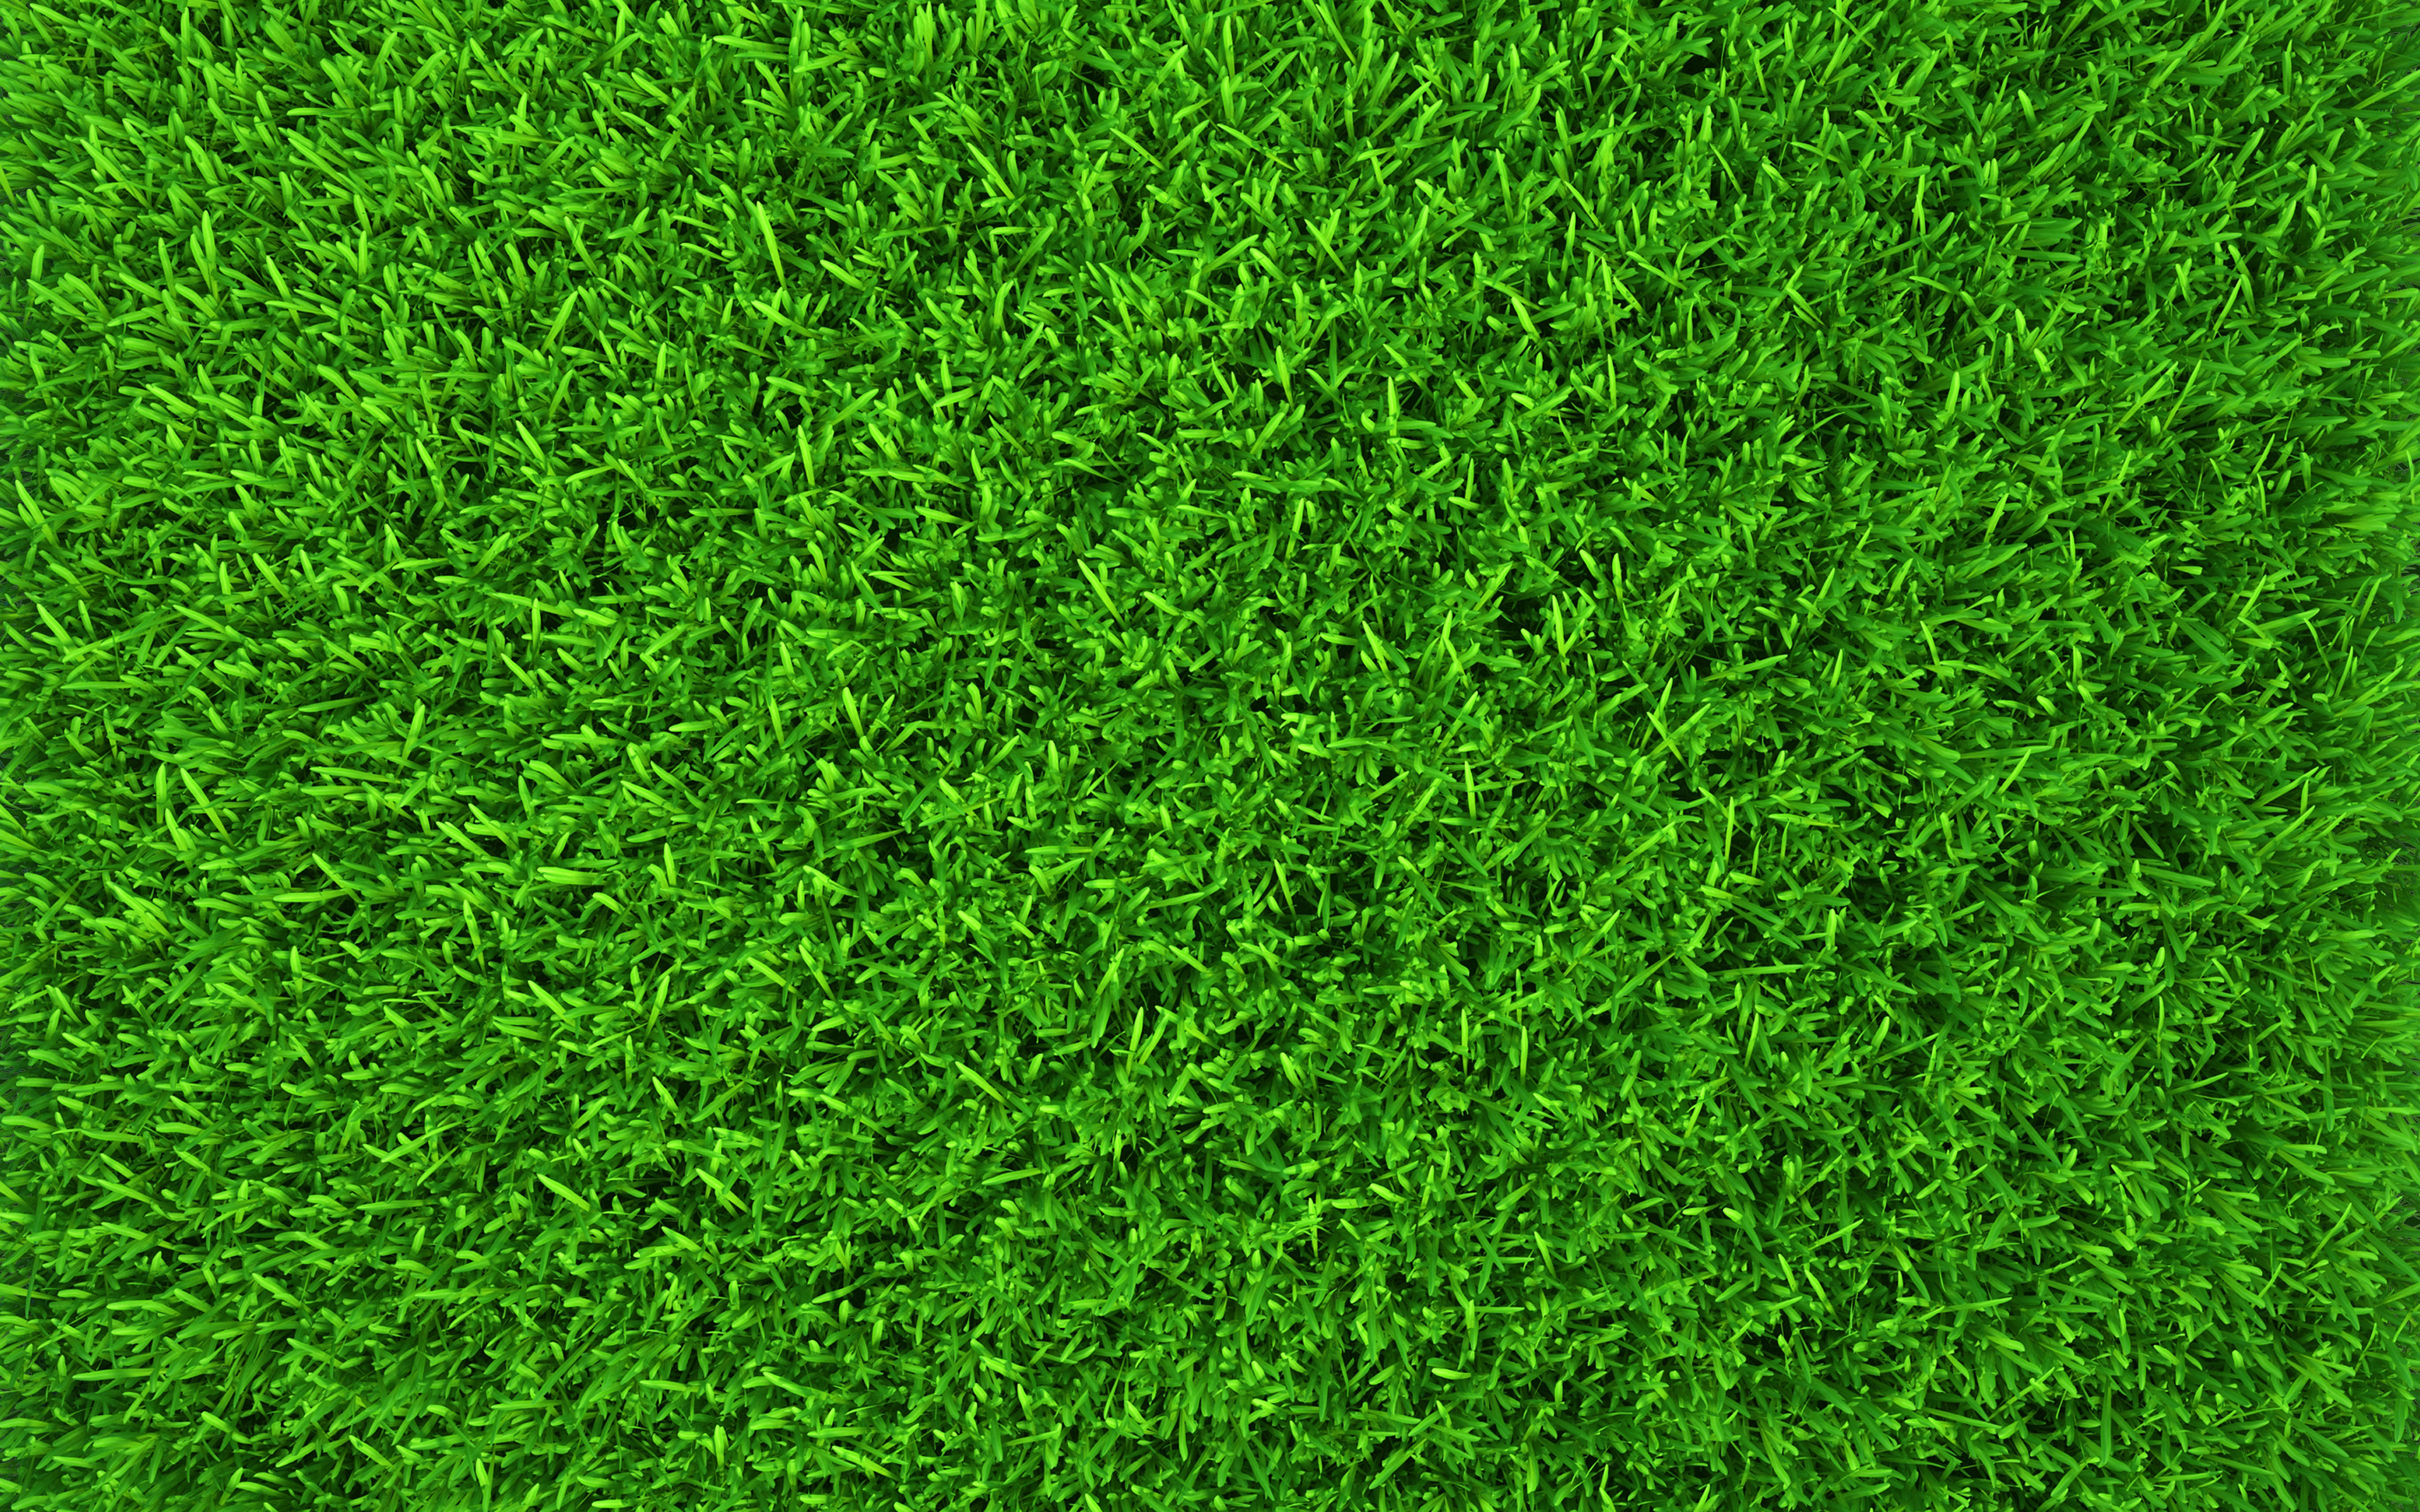 Download Wallpaper Green Grass Texture, 4k, Summer, Macro, Green Background, Grass Textures, Green Grass, Close Up, Grass From Top, Grass Background For Desktop With Resolution 3840x2400. High Quality HD Picture Wallpaper